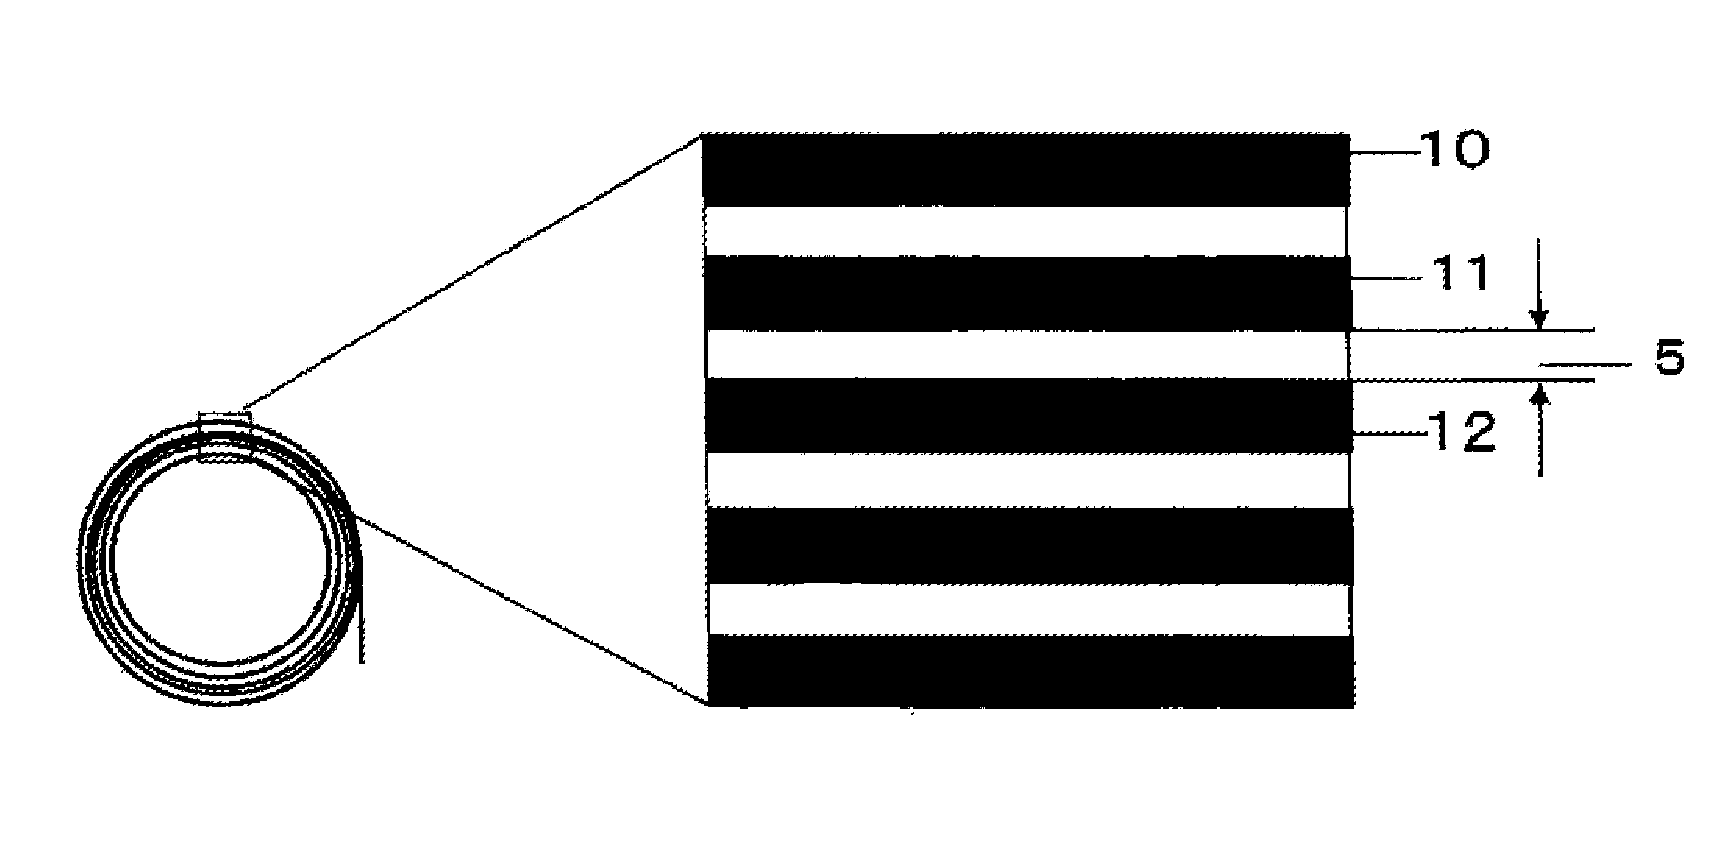 Method for producing carbonaceous film, method for producing graphite film, roll of polymer film, and roll of carbonaceous film